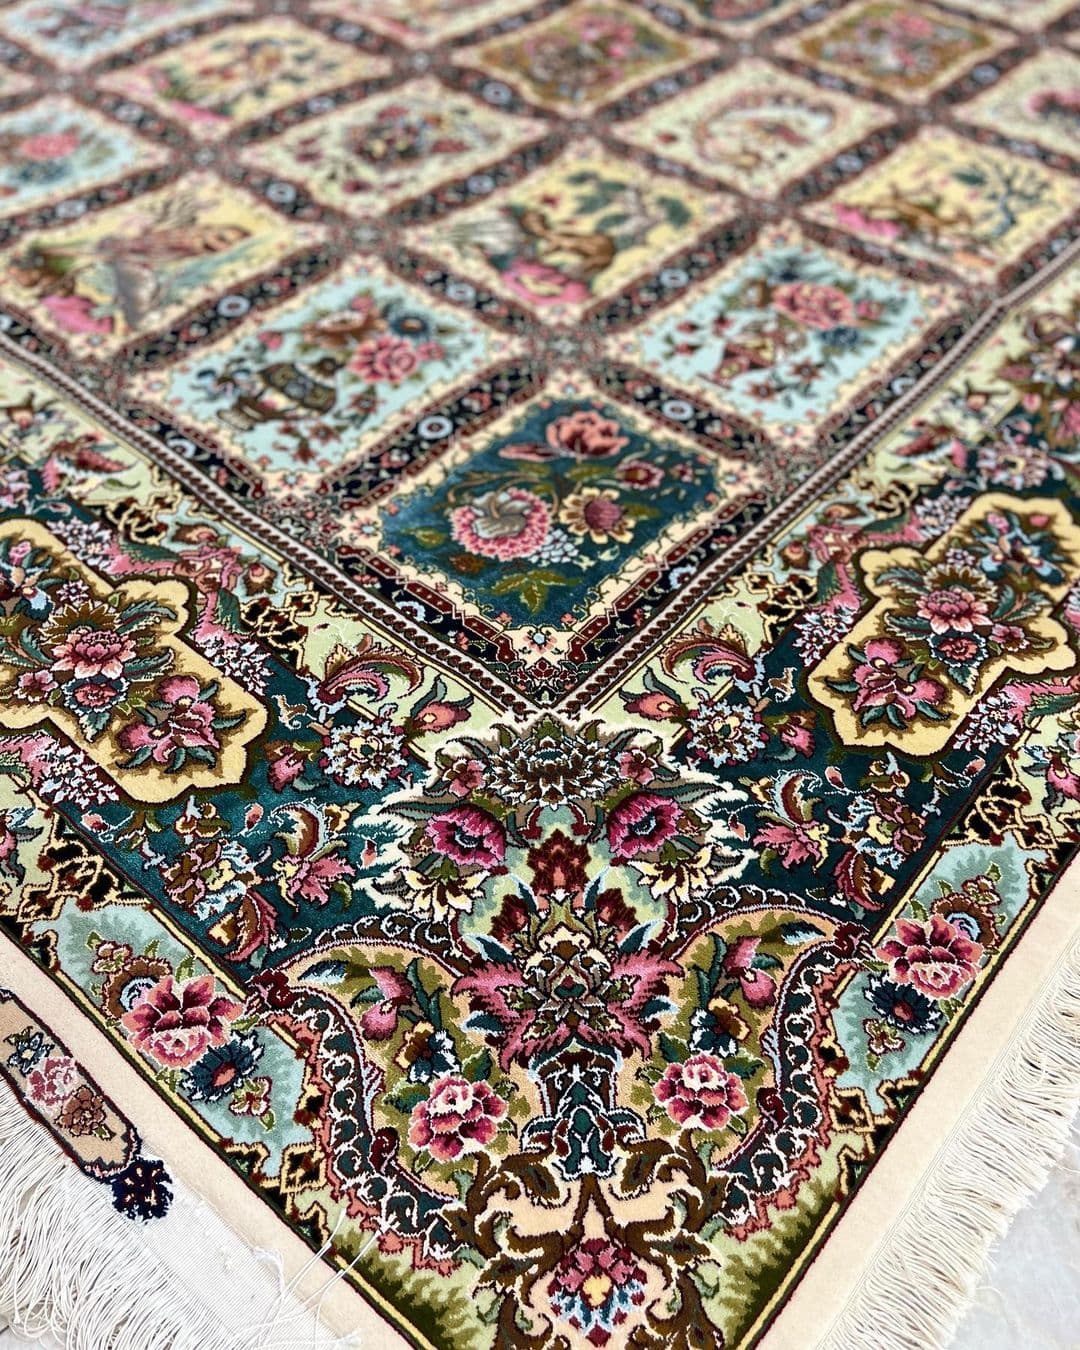 Modern carpets